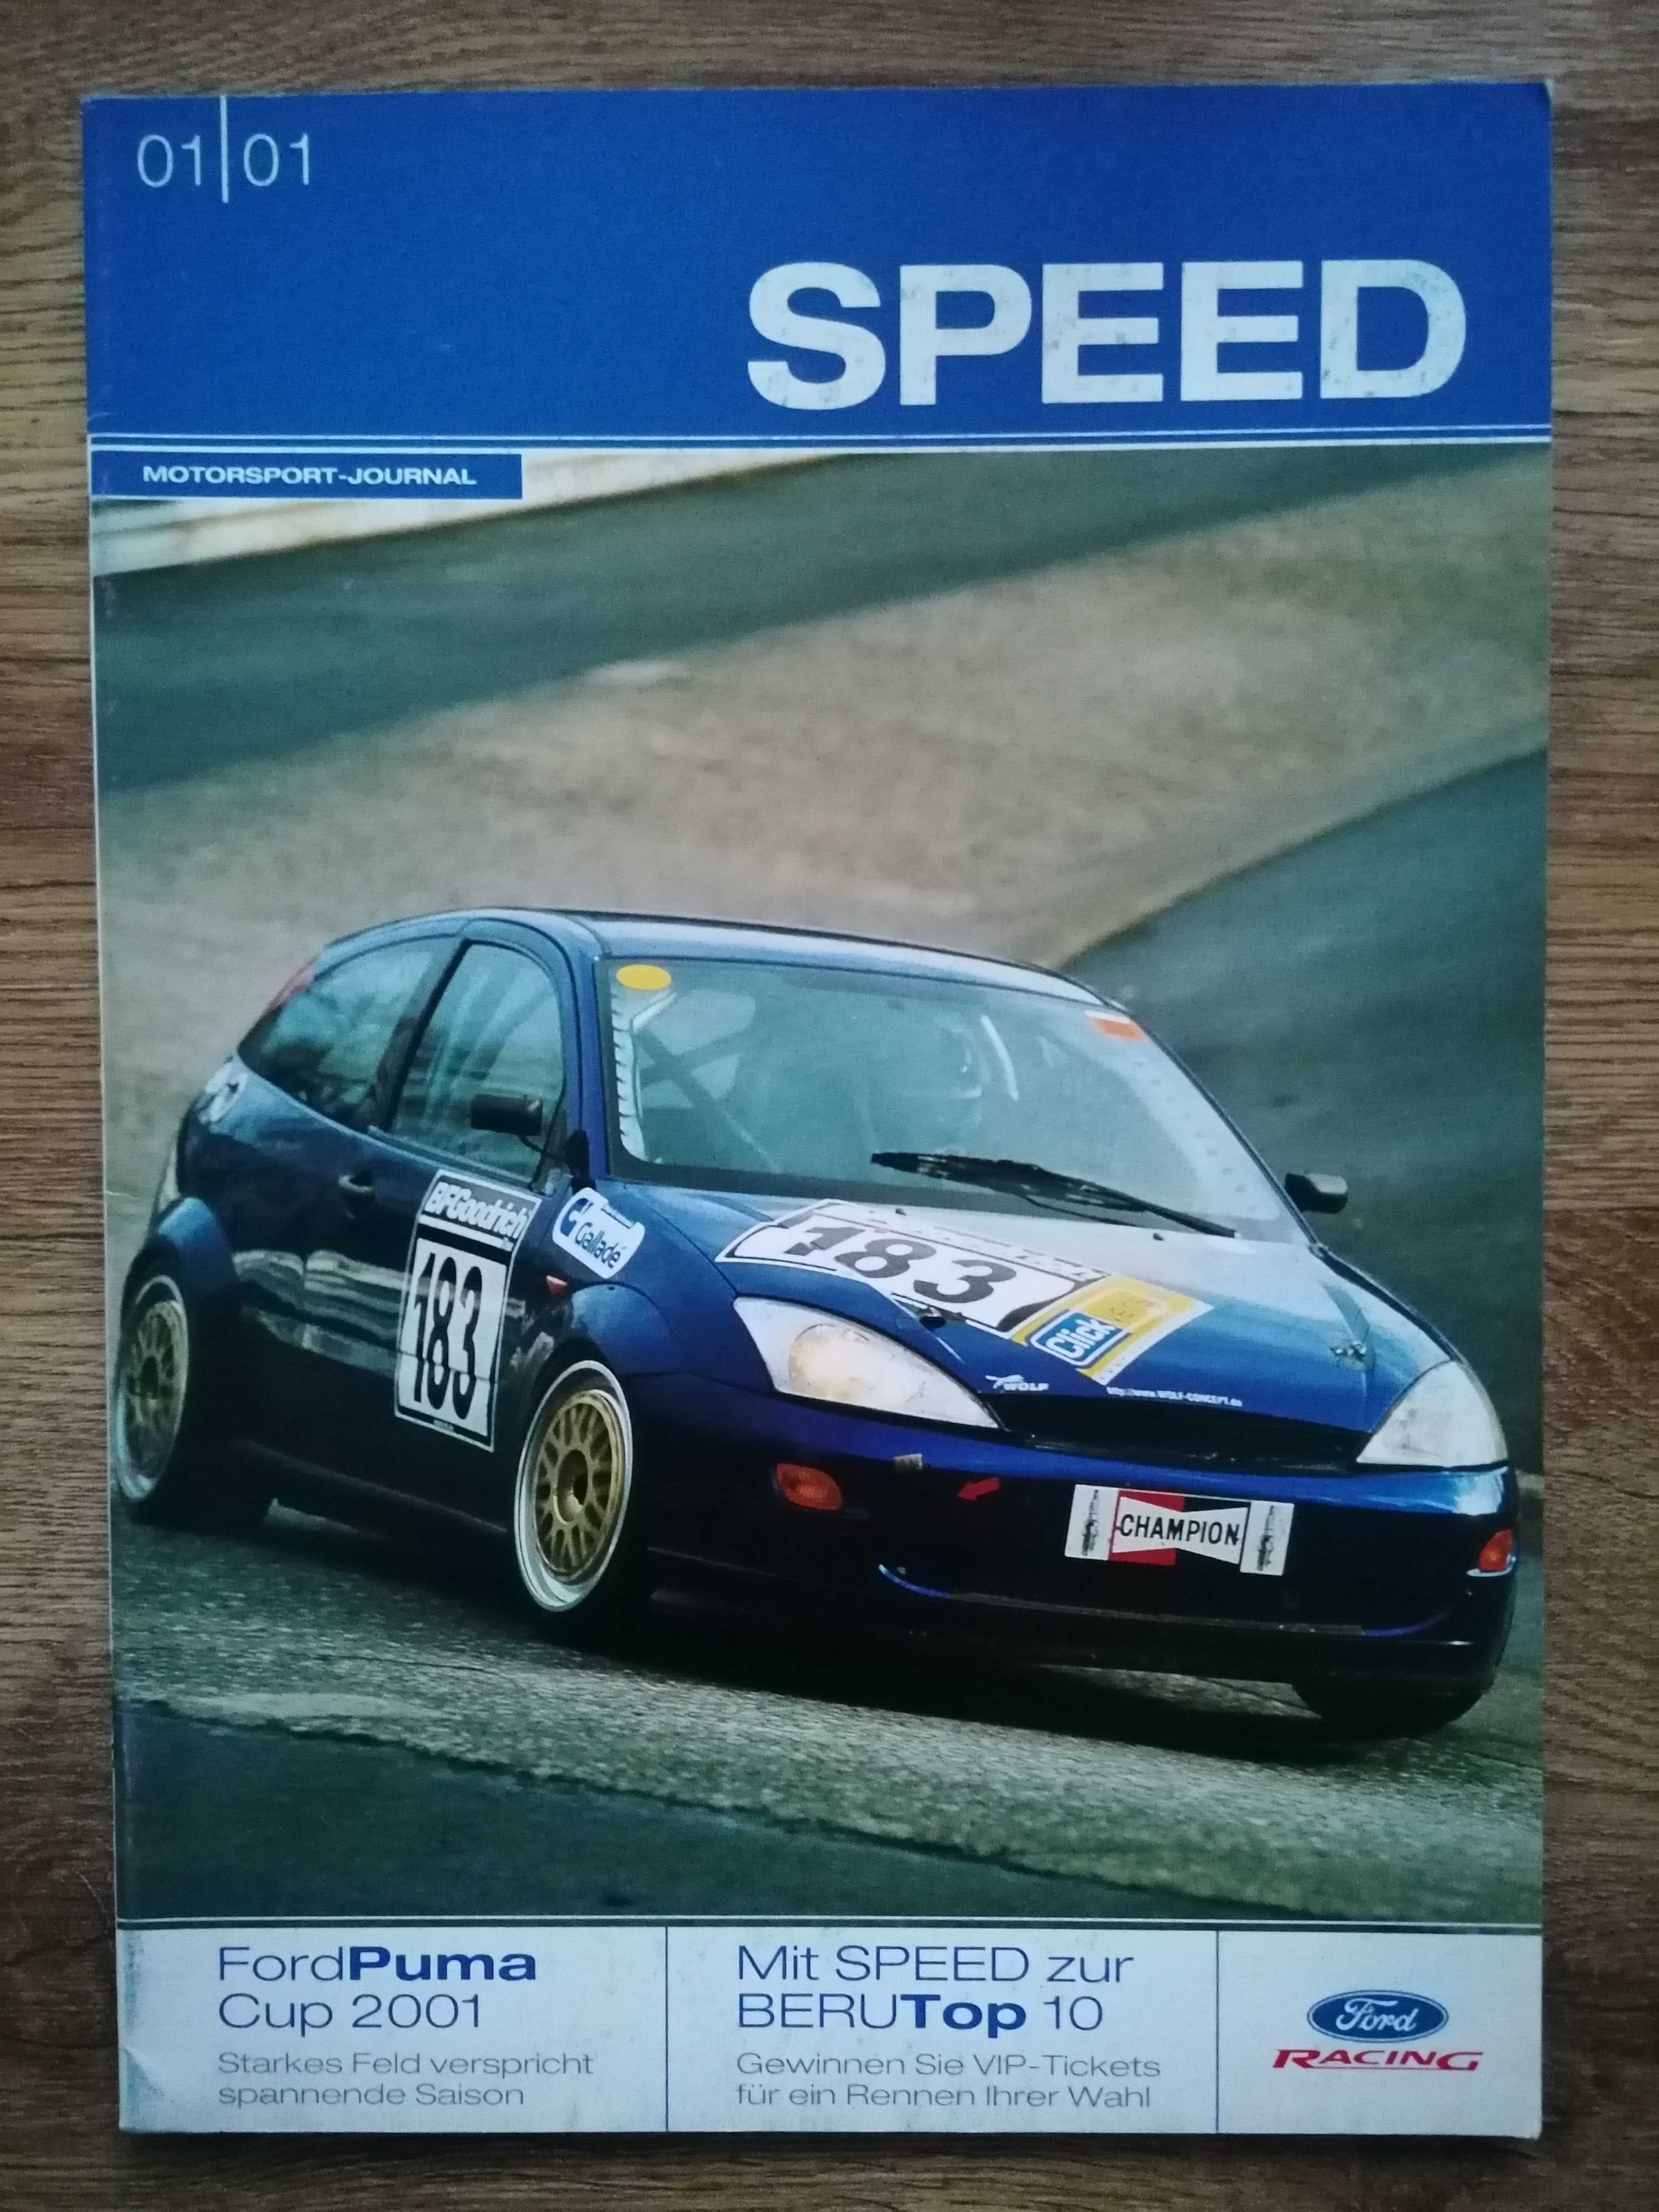 Ford Speed Motorsport Journal